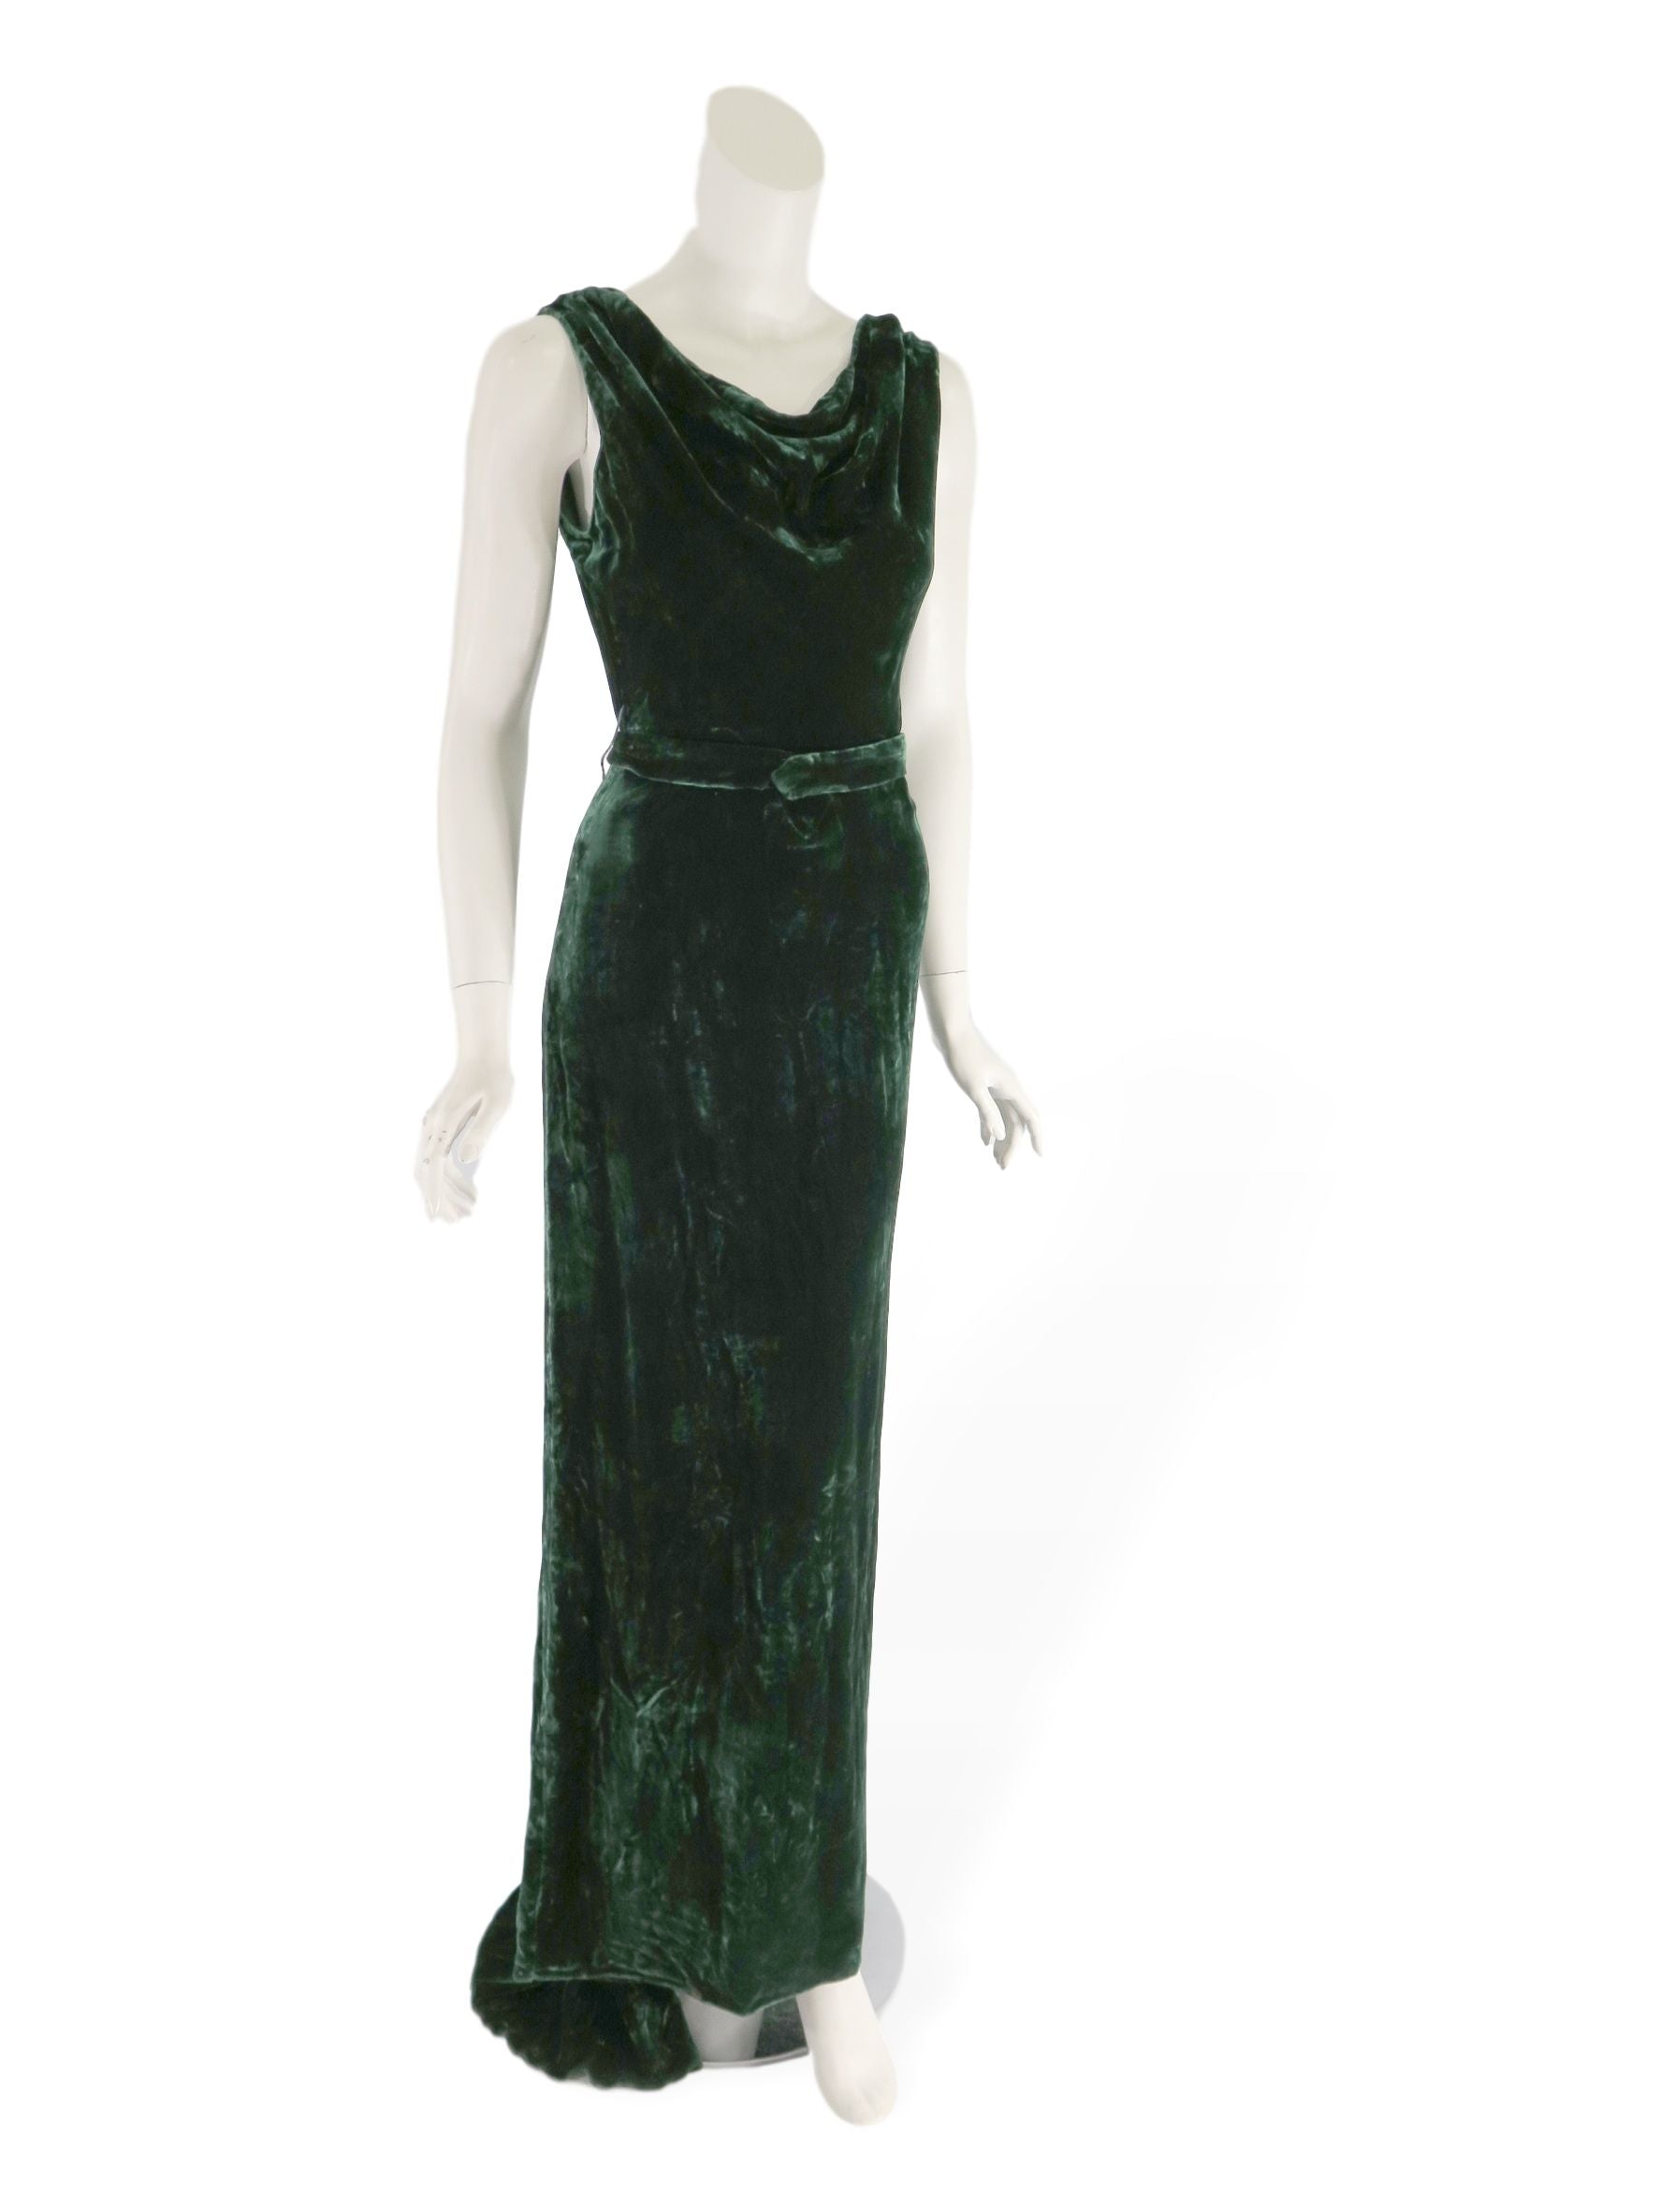 Zazie Beetz Dark Green Velvet Wrap Evening Dress Designing Women Awards -  TheCelebrityDresses